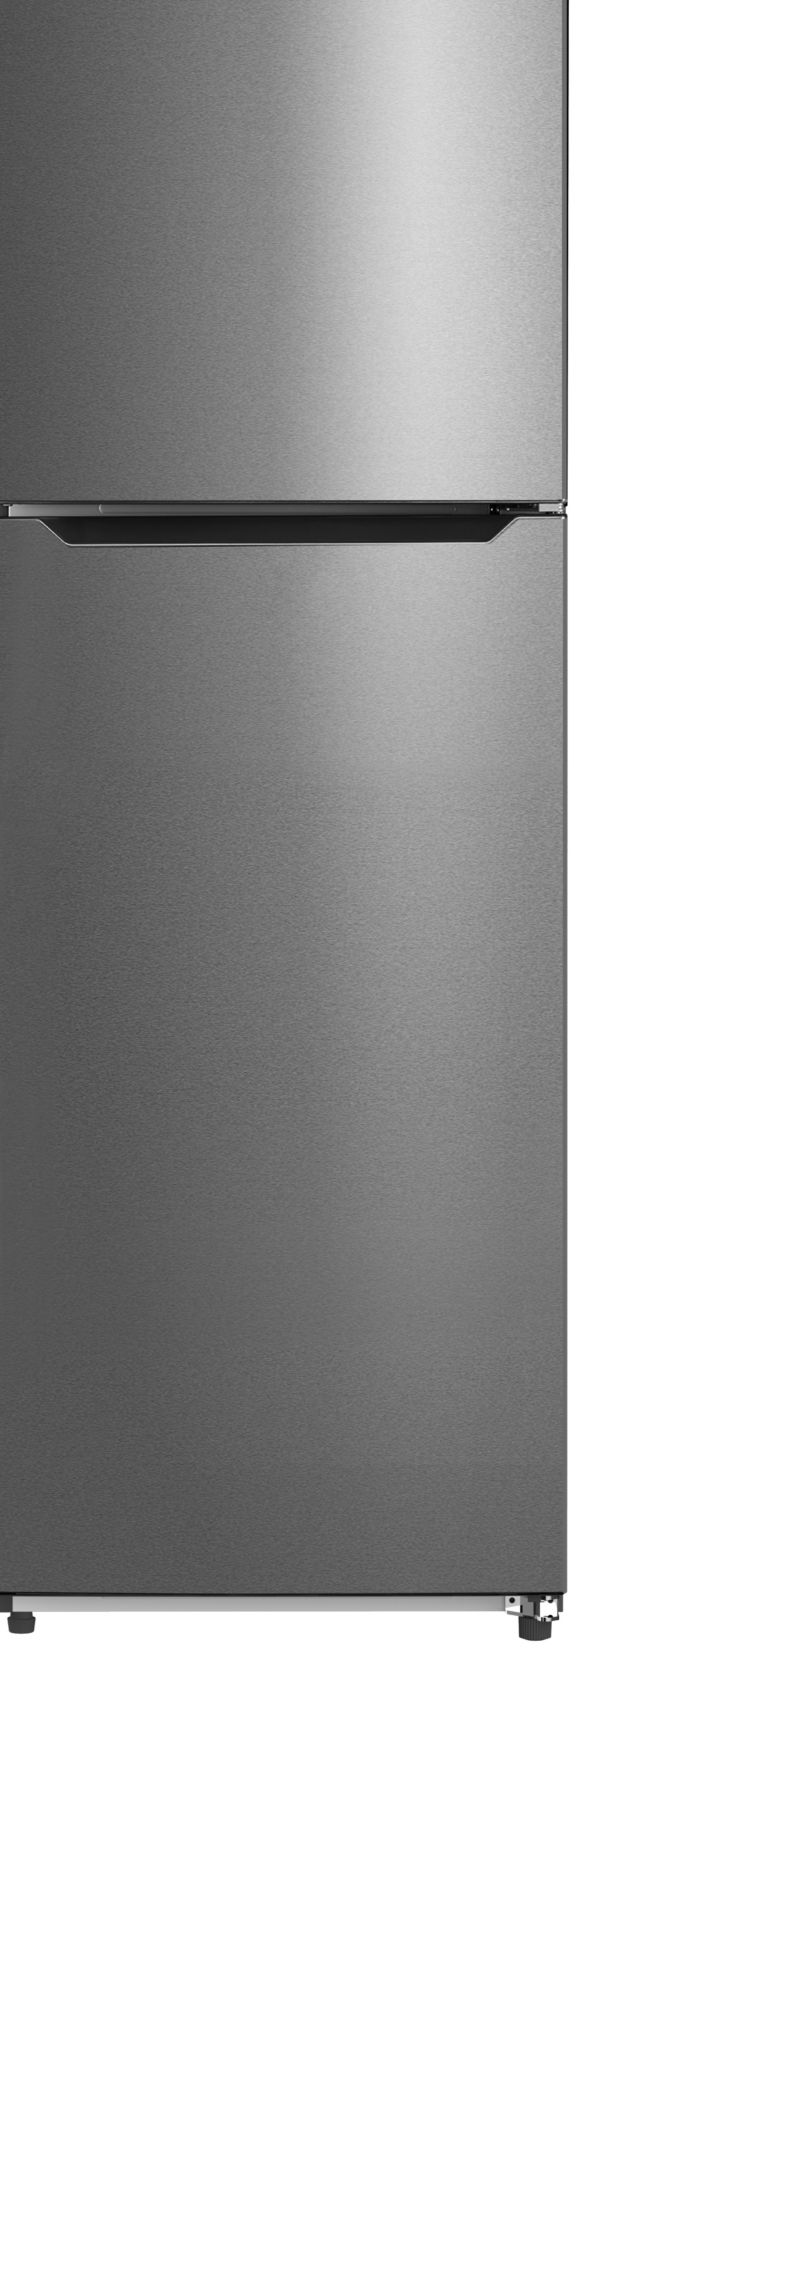 Réfrigérateur 2 portes ESSENTIELB ERDV175-60miv1